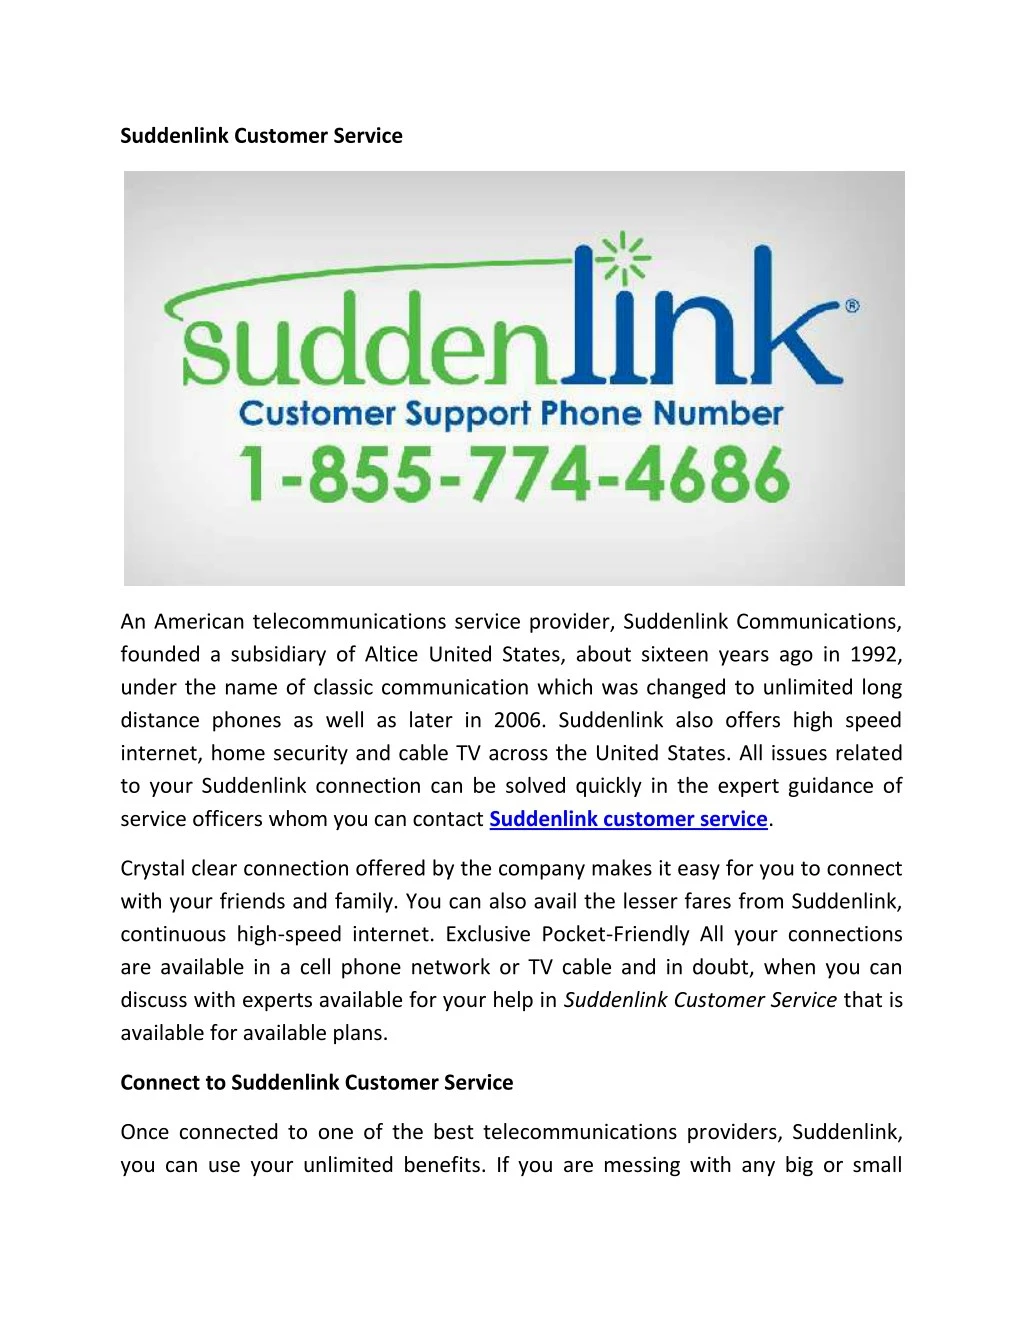 suddenlink customer service